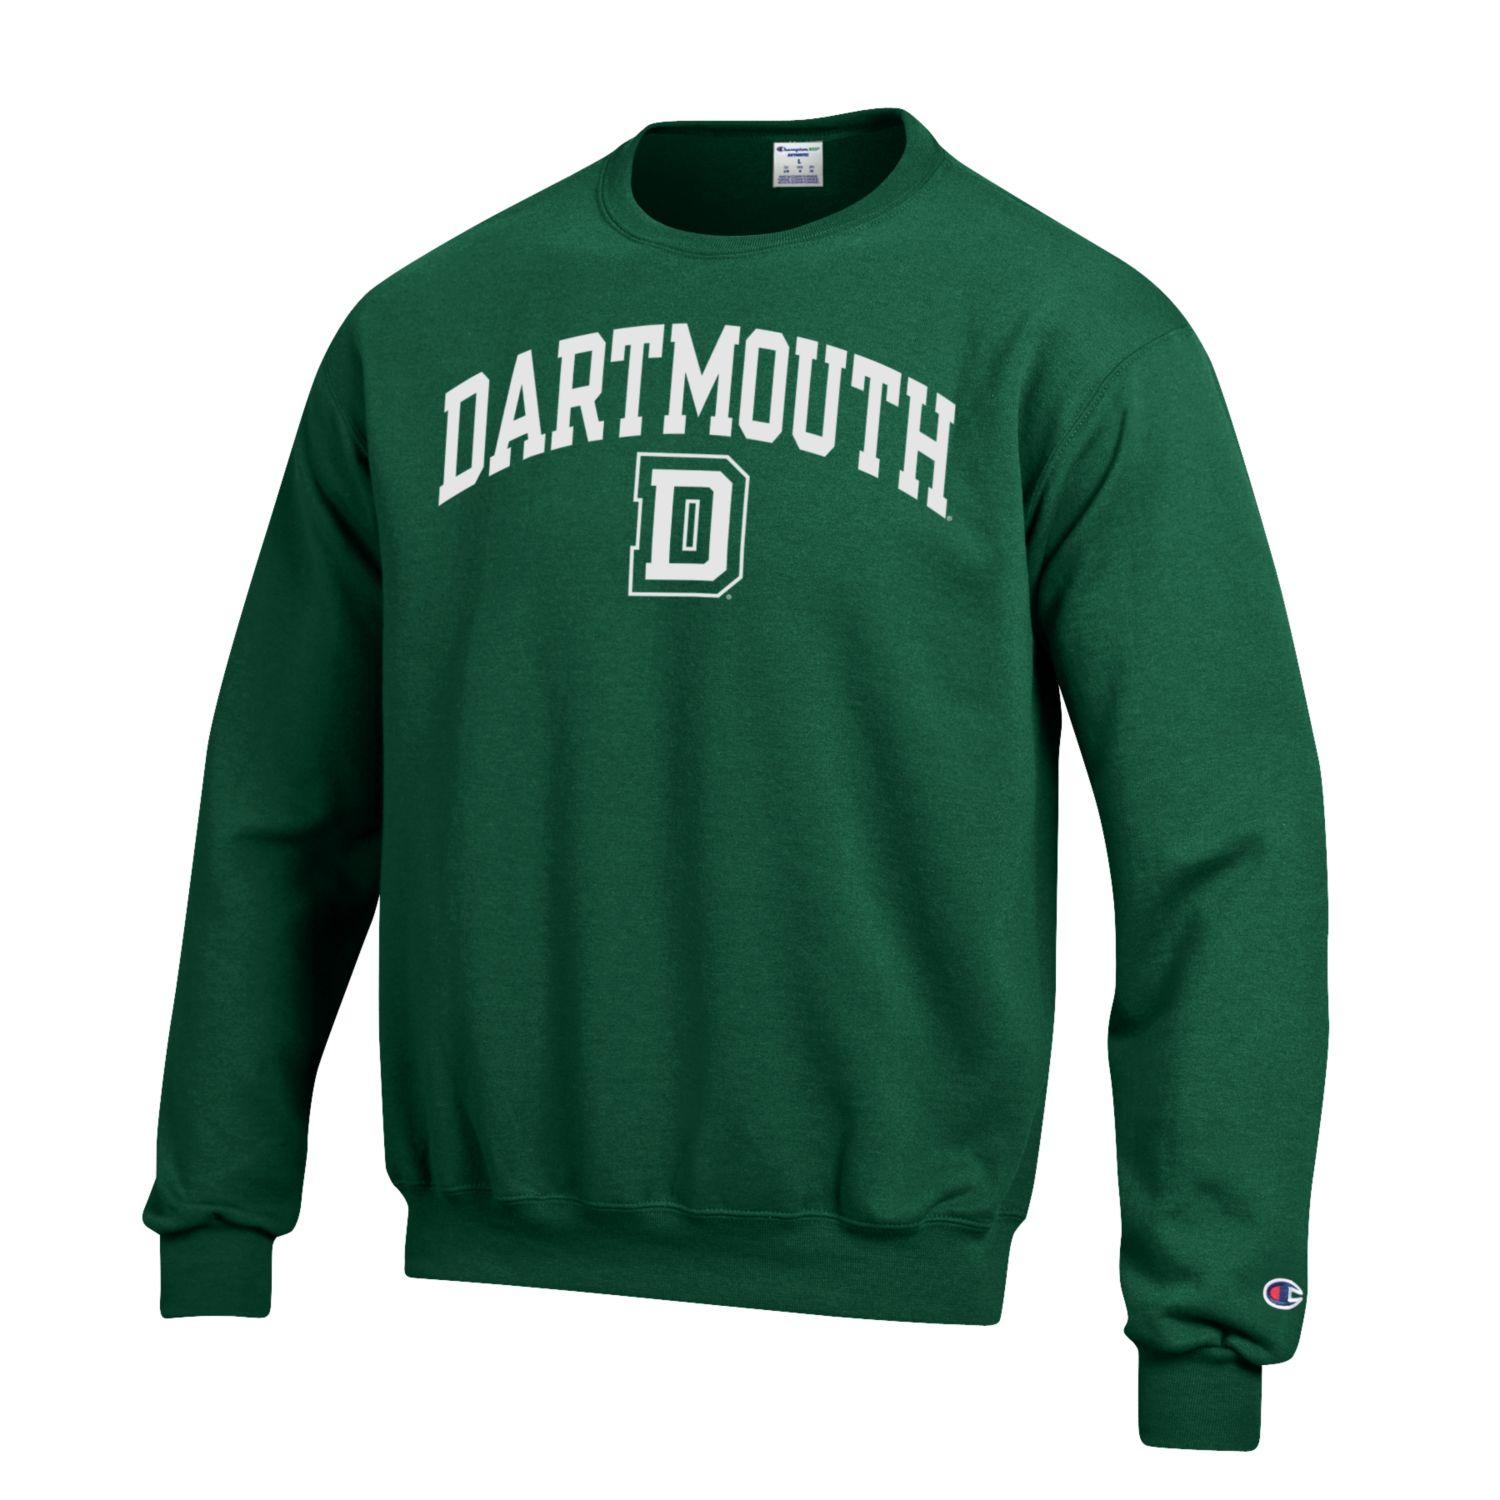 dartmouth college sweatshirt